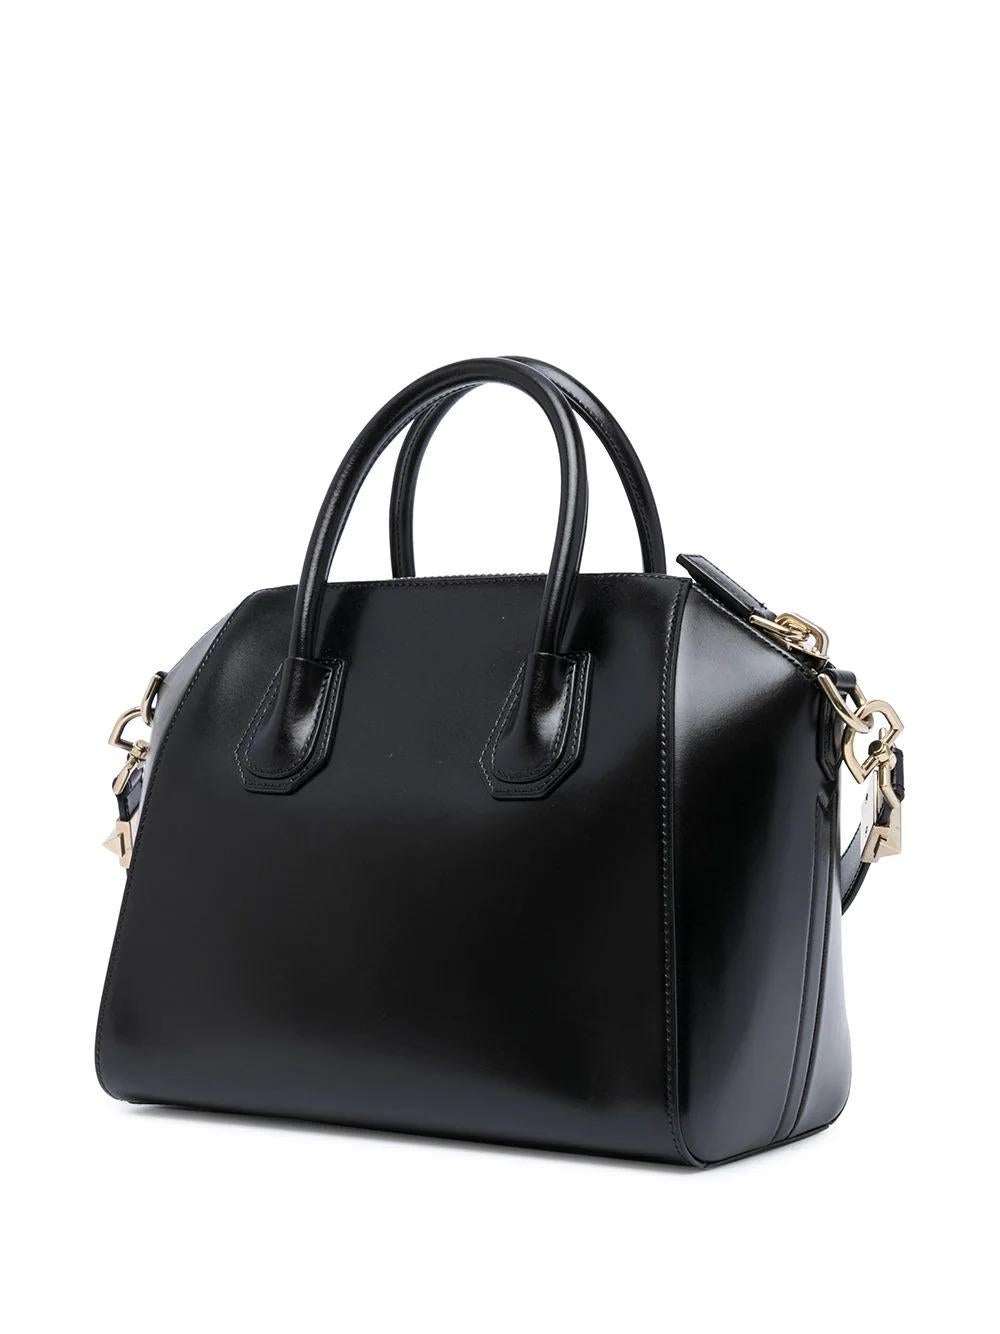 Givenchy Black Antigona Bag In Excellent Condition In London, GB